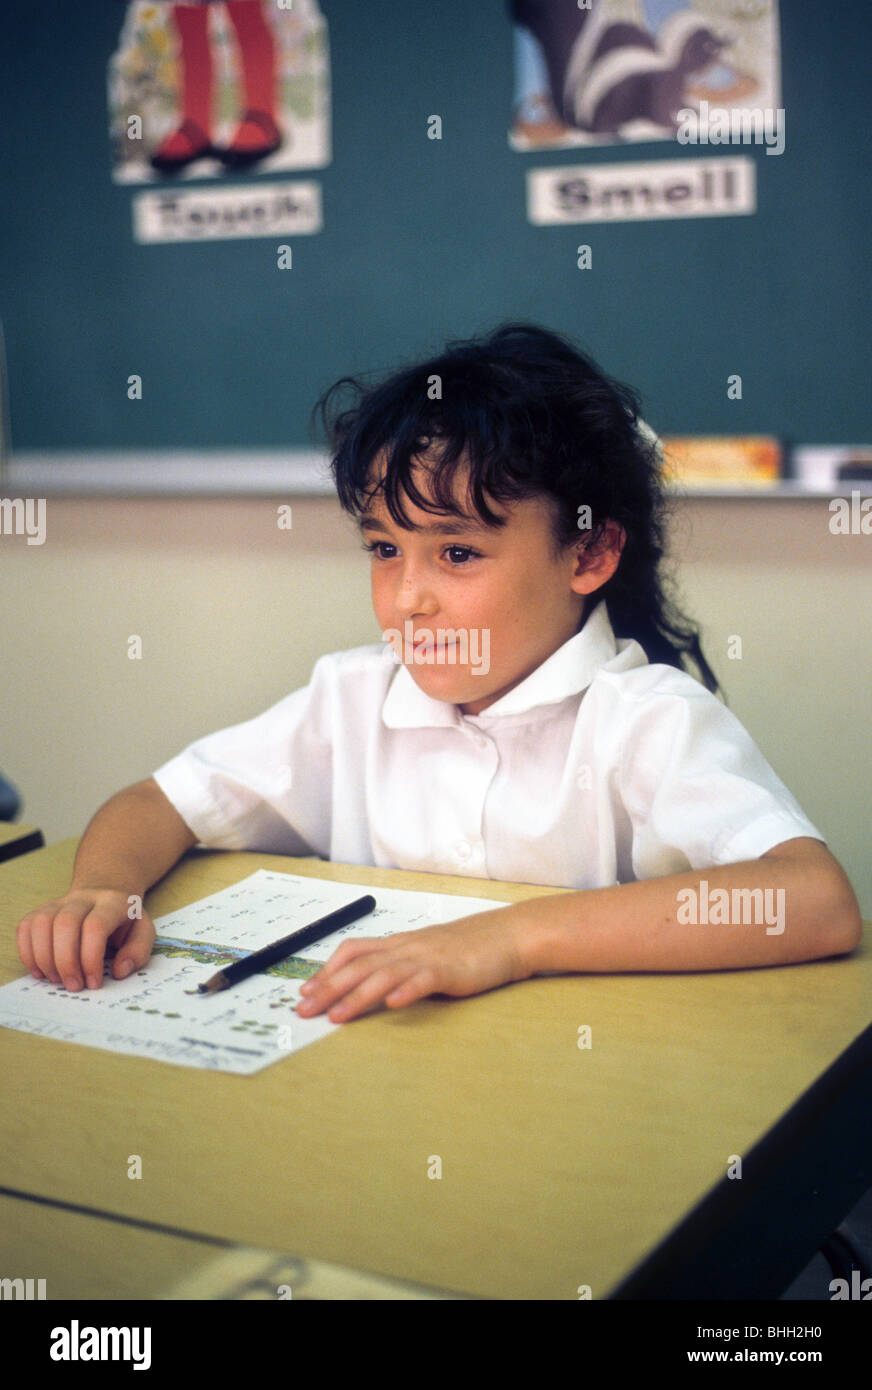 young girl smile desk school alert listen wait write test Stock Photo